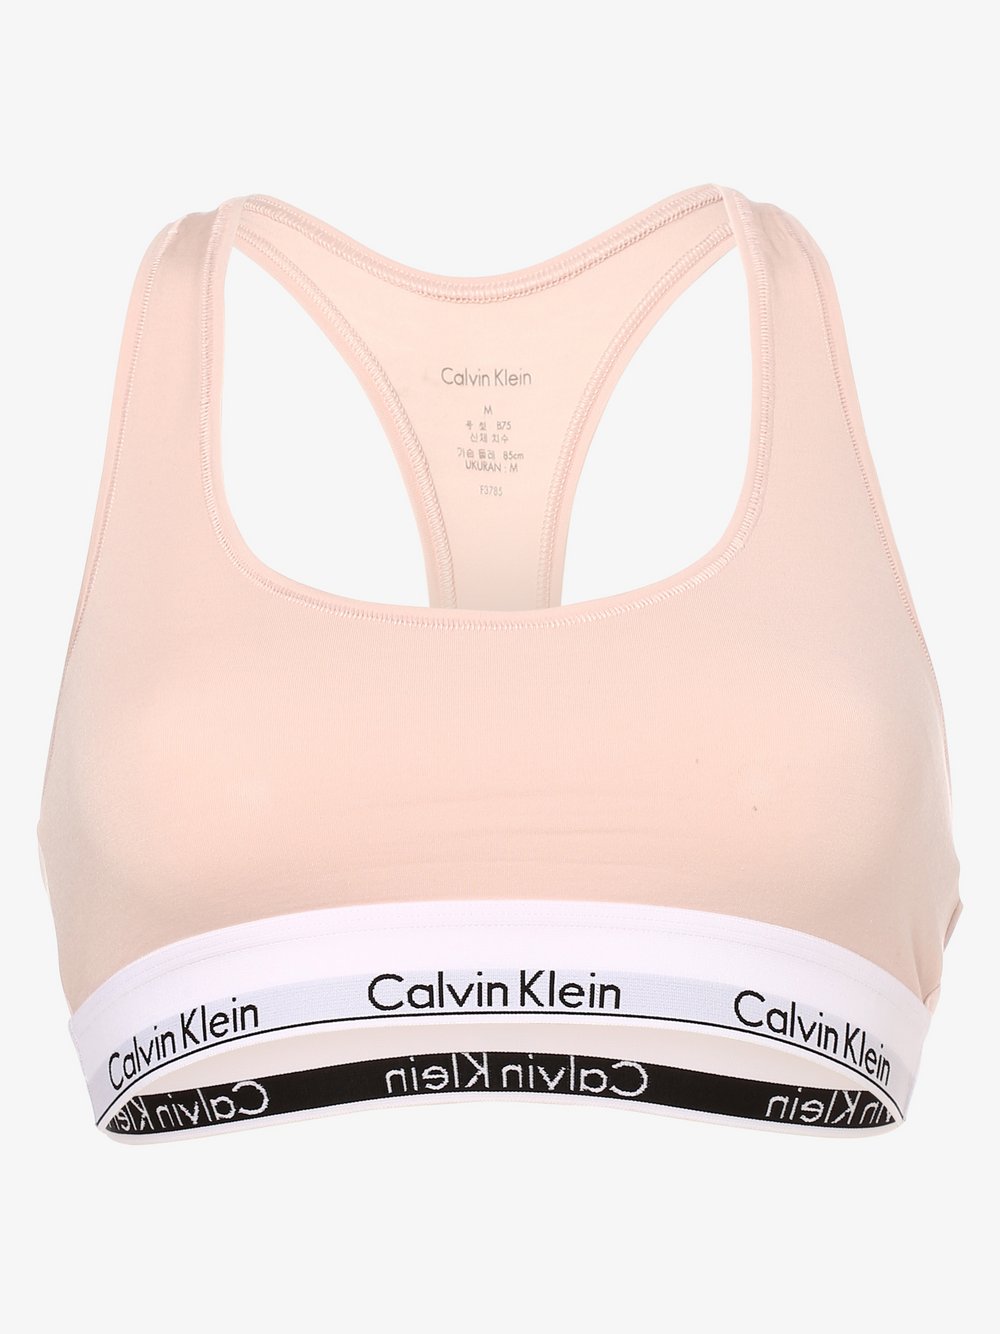 Calvin Klein - Gorset damski, różowy